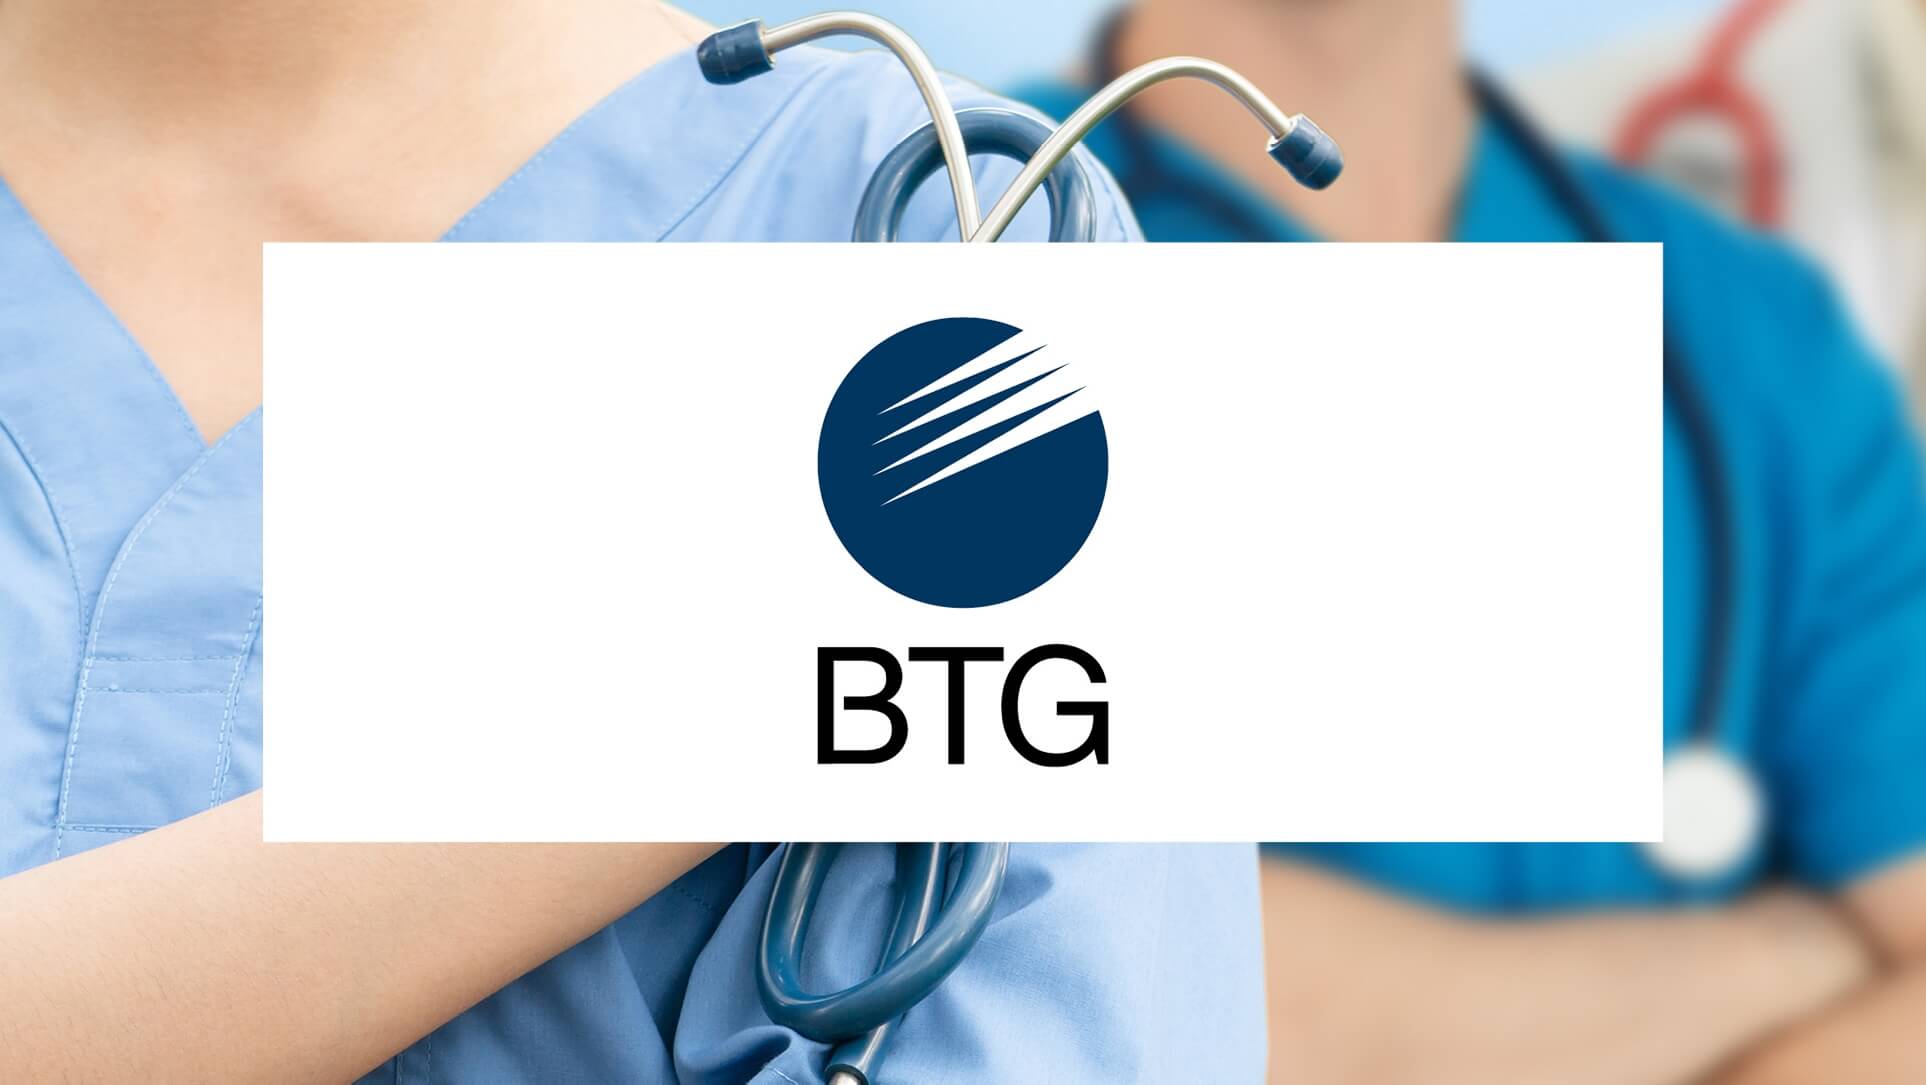 BTG Logo and Background